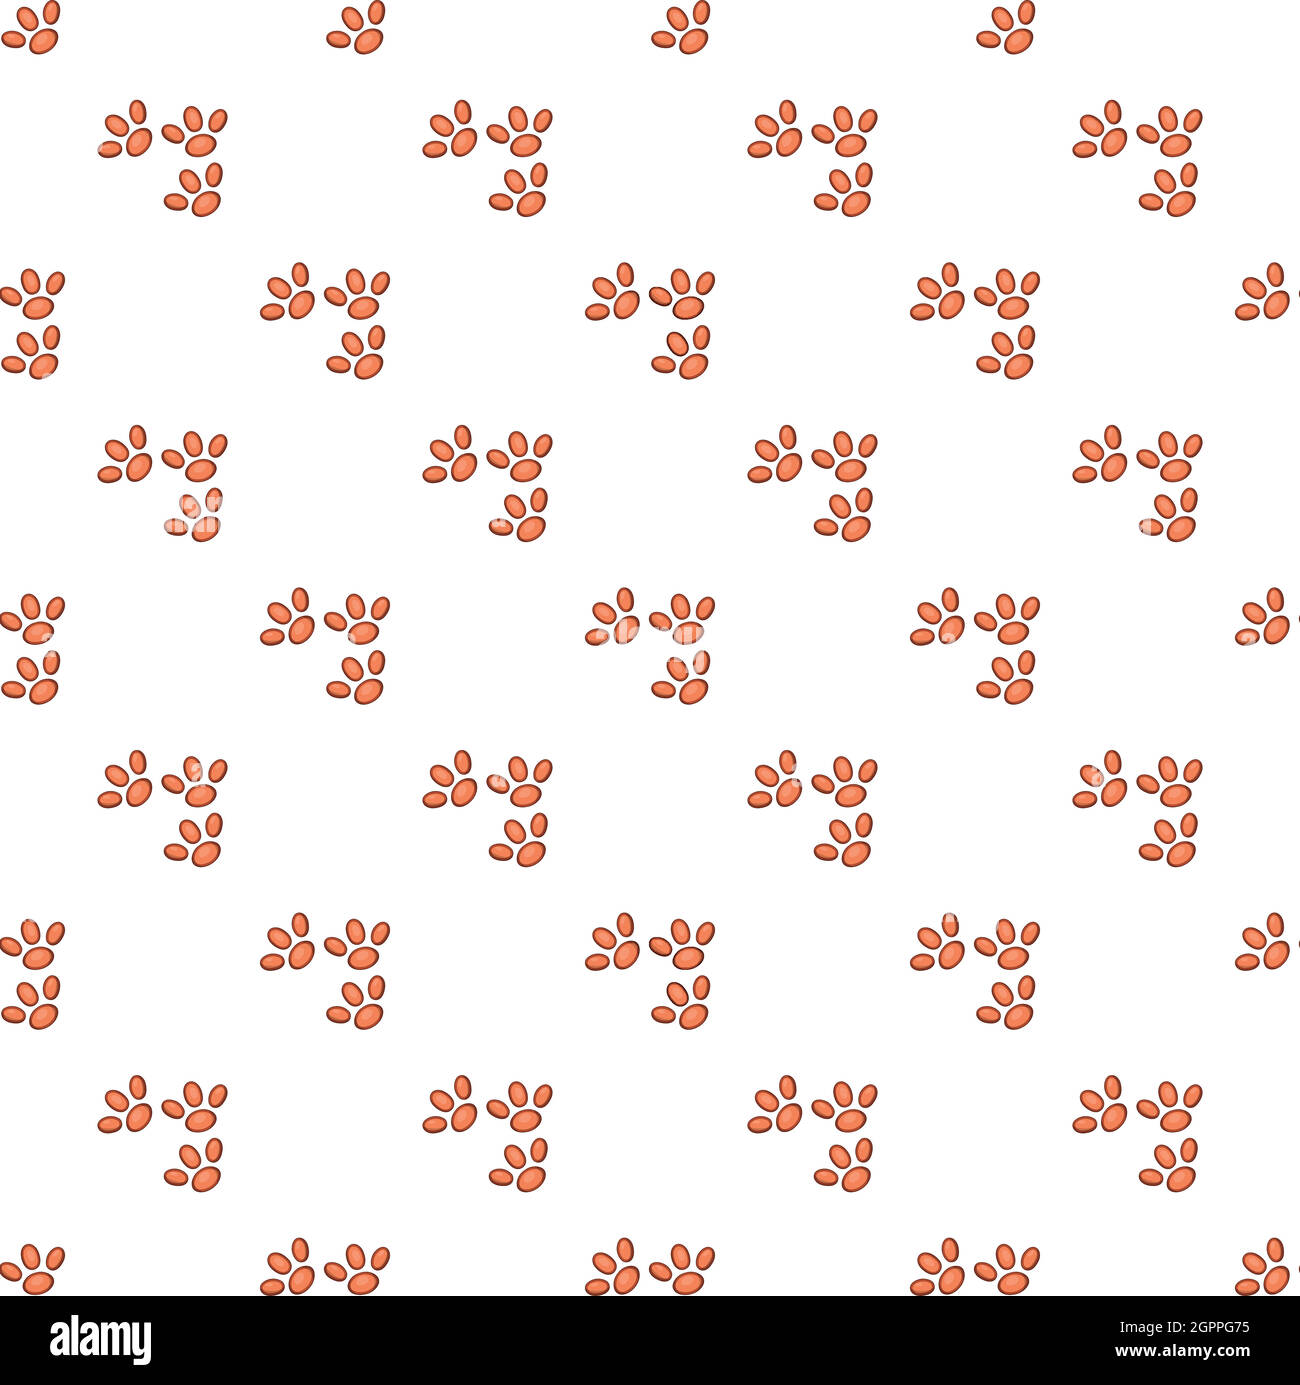 Dog prints pattern, cartoon style Stock Vector